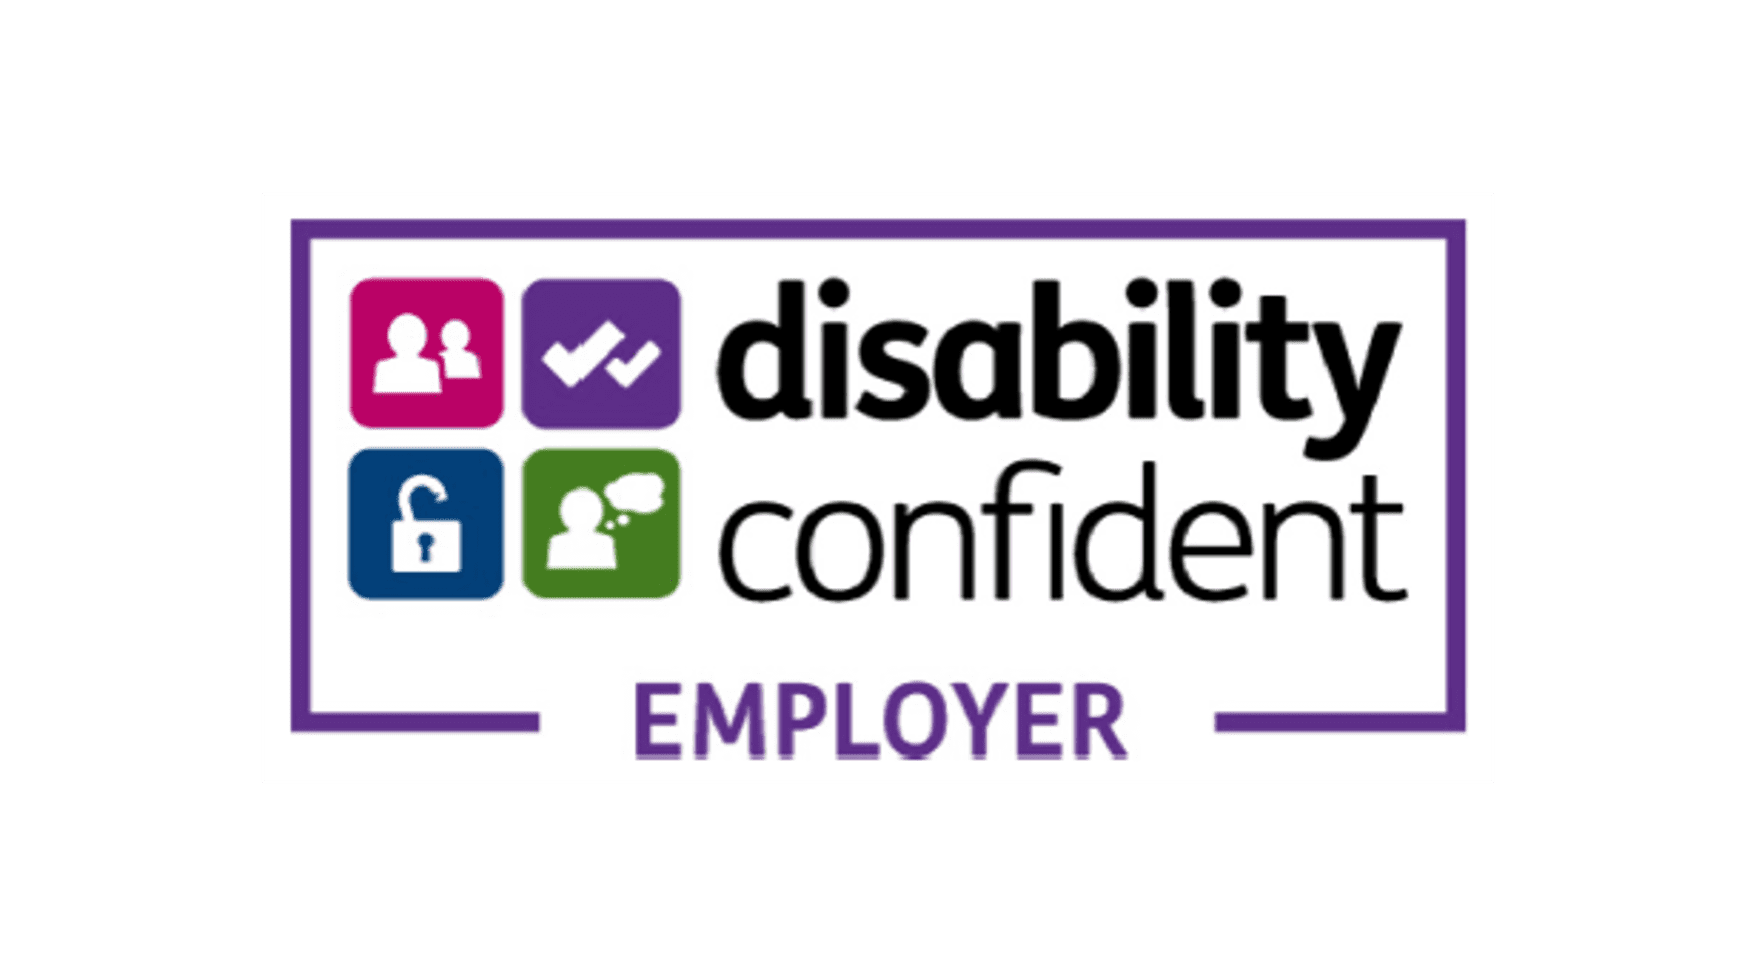 disability-confident-logo